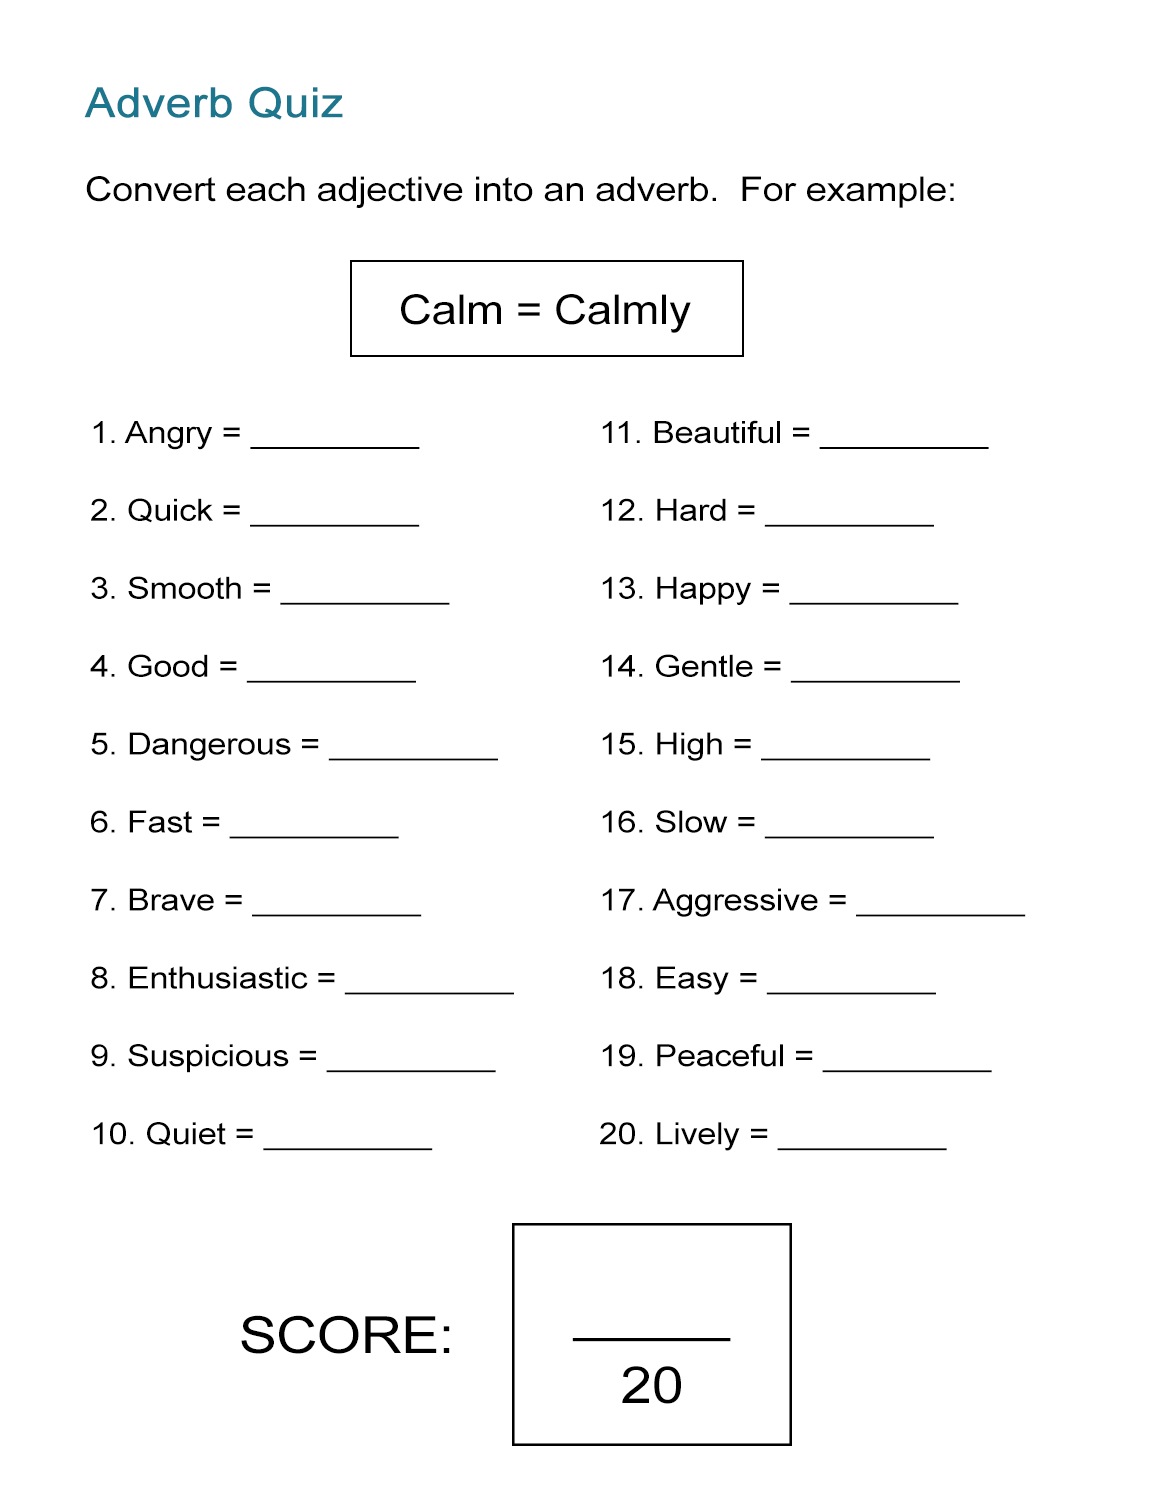 Adverb Quiz: Convert Adjectives to Adverbs - ALL ESL